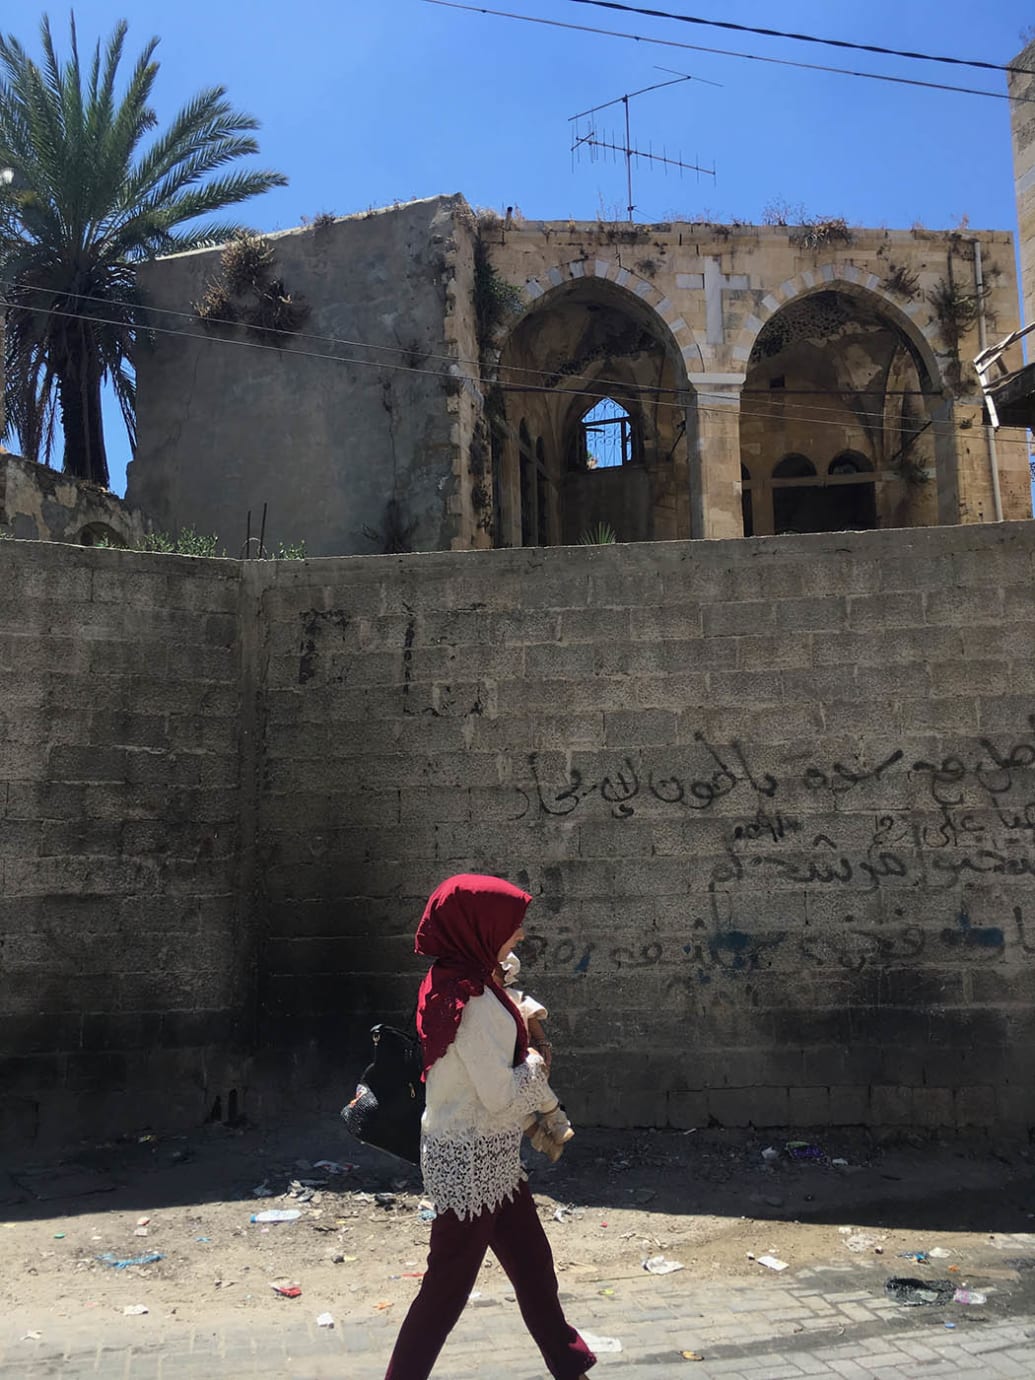 Gaza Historical Photos and Memorabilia Find Permanent Home –